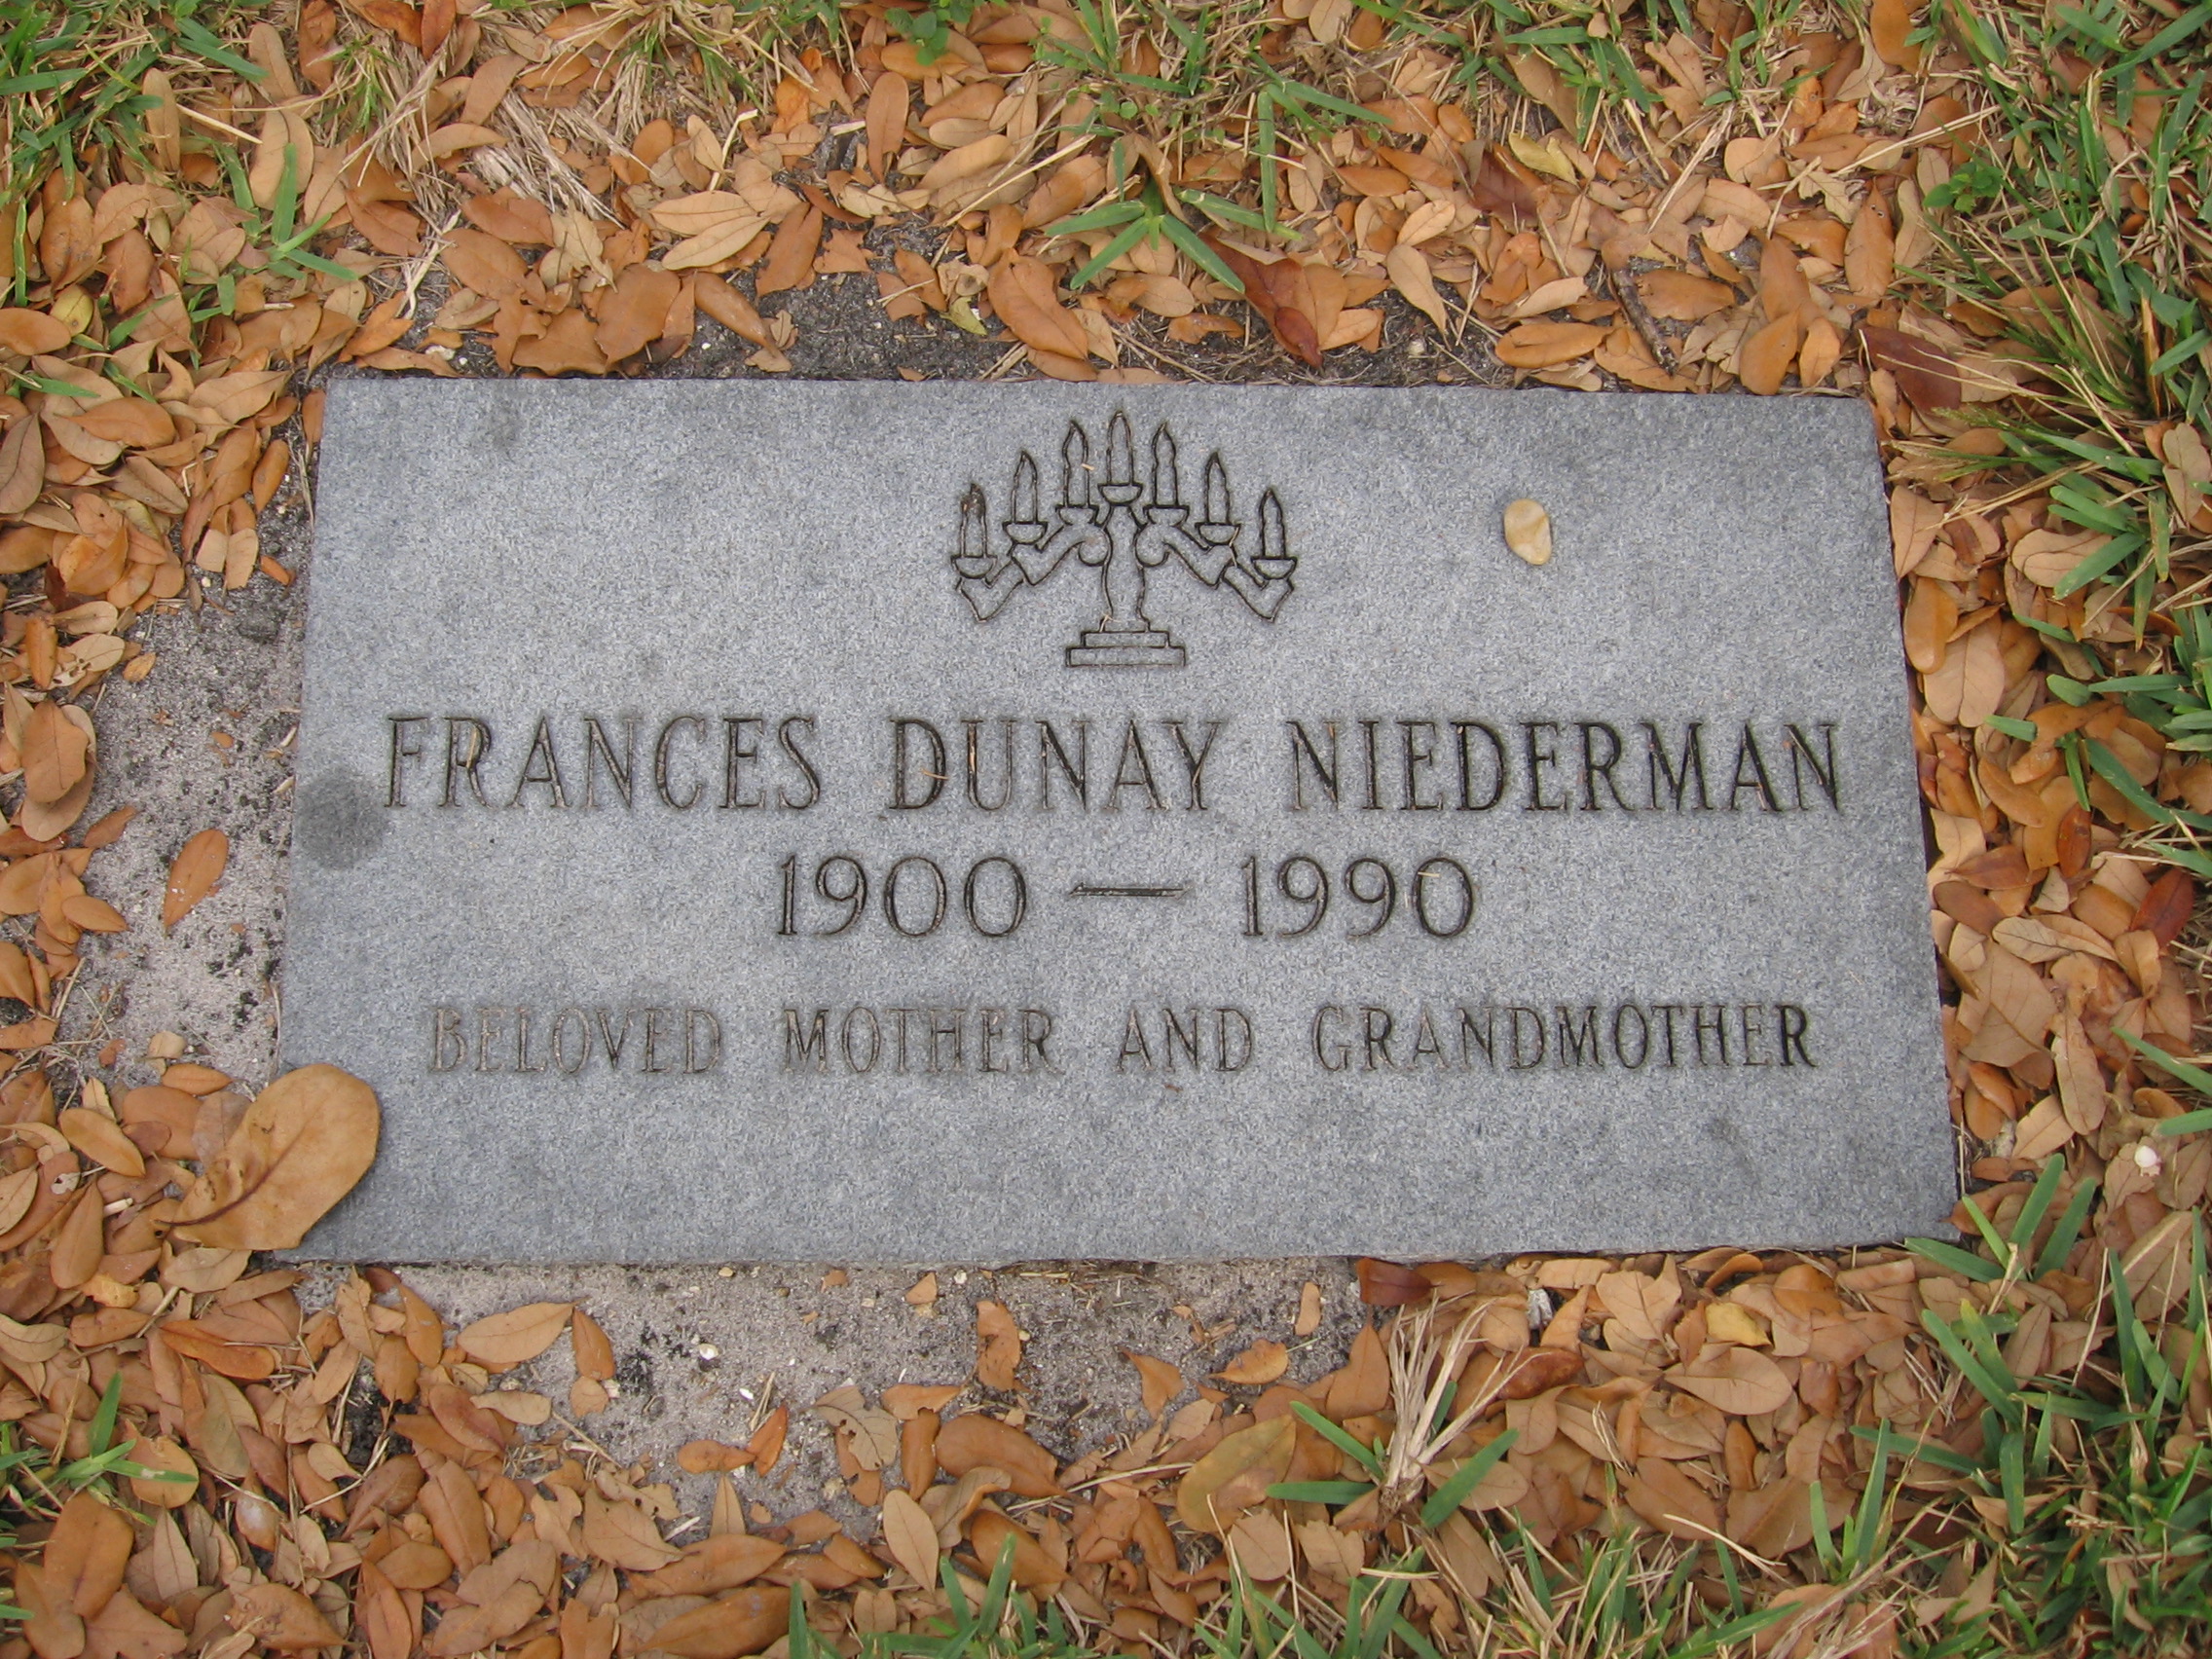 Frances Dunay Niederman